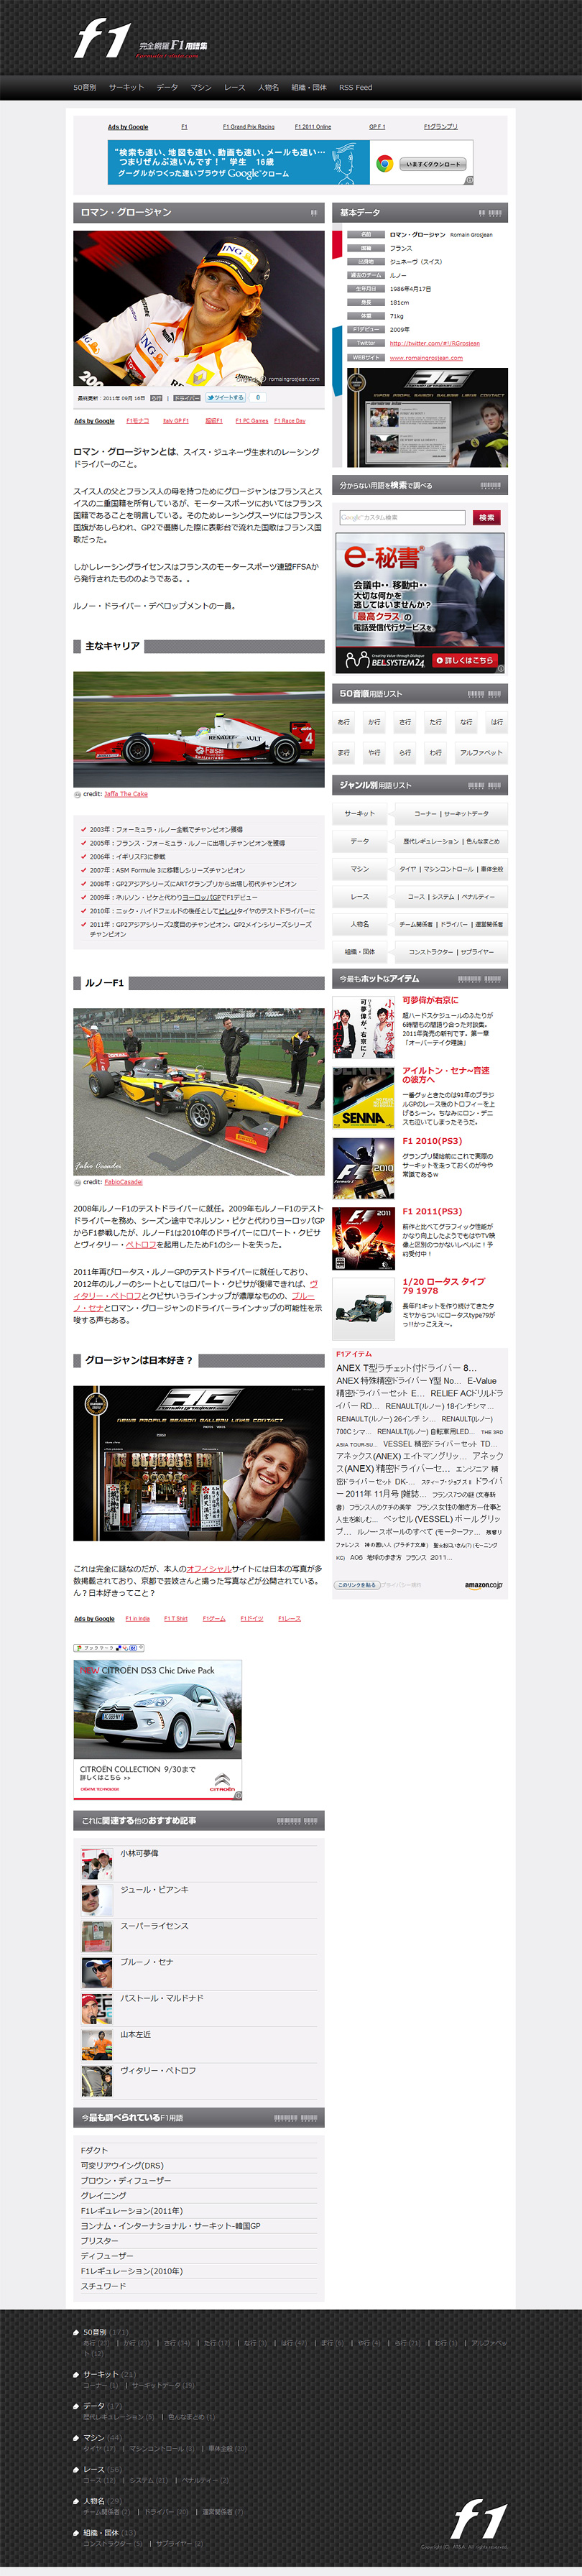 F1用語集サイトデザイン